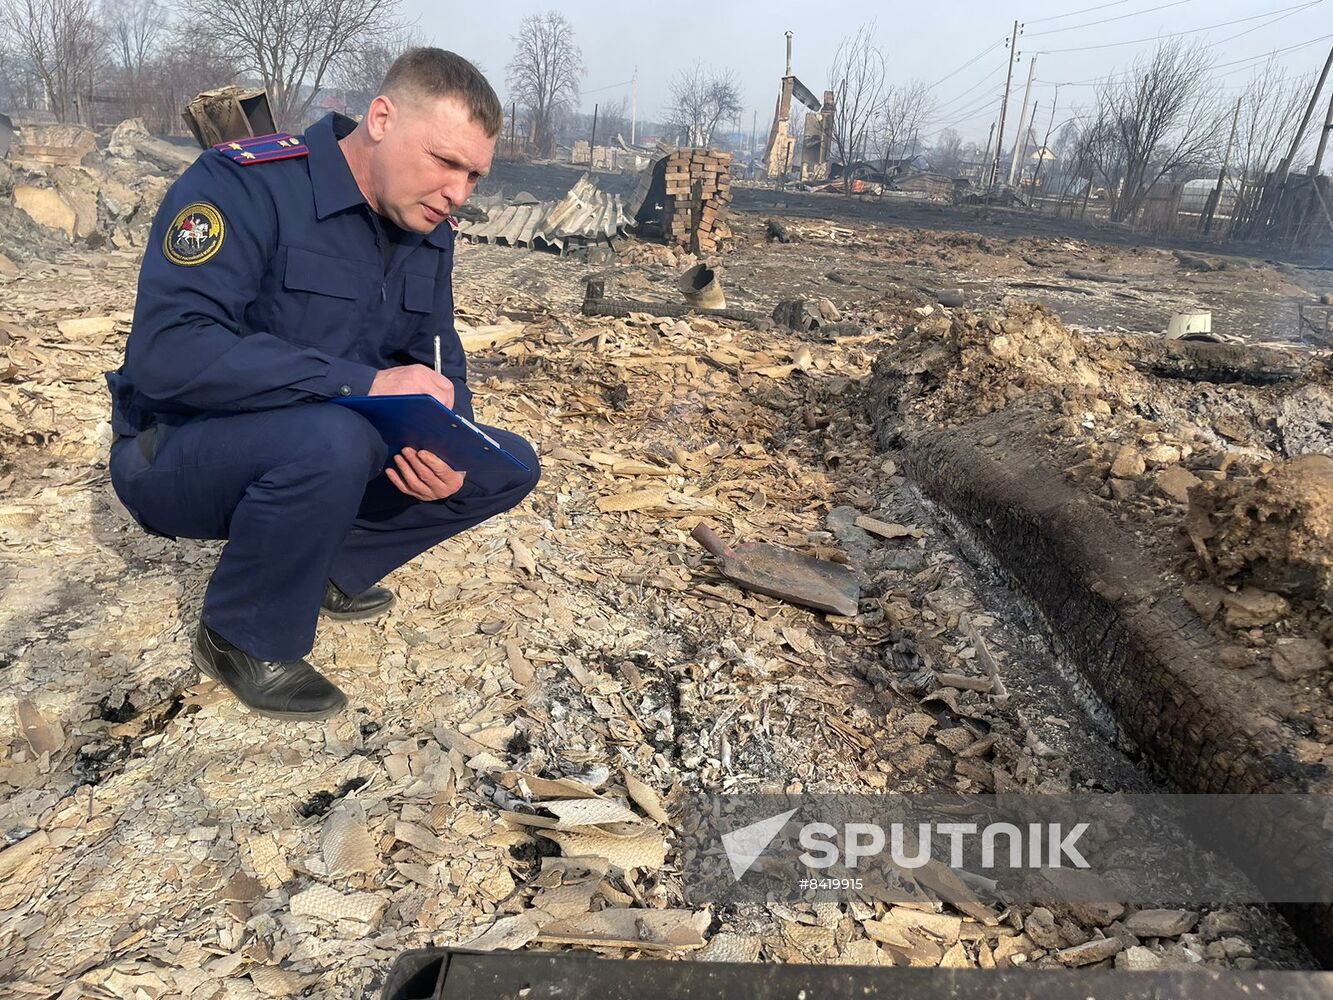 Russia Fire Damage